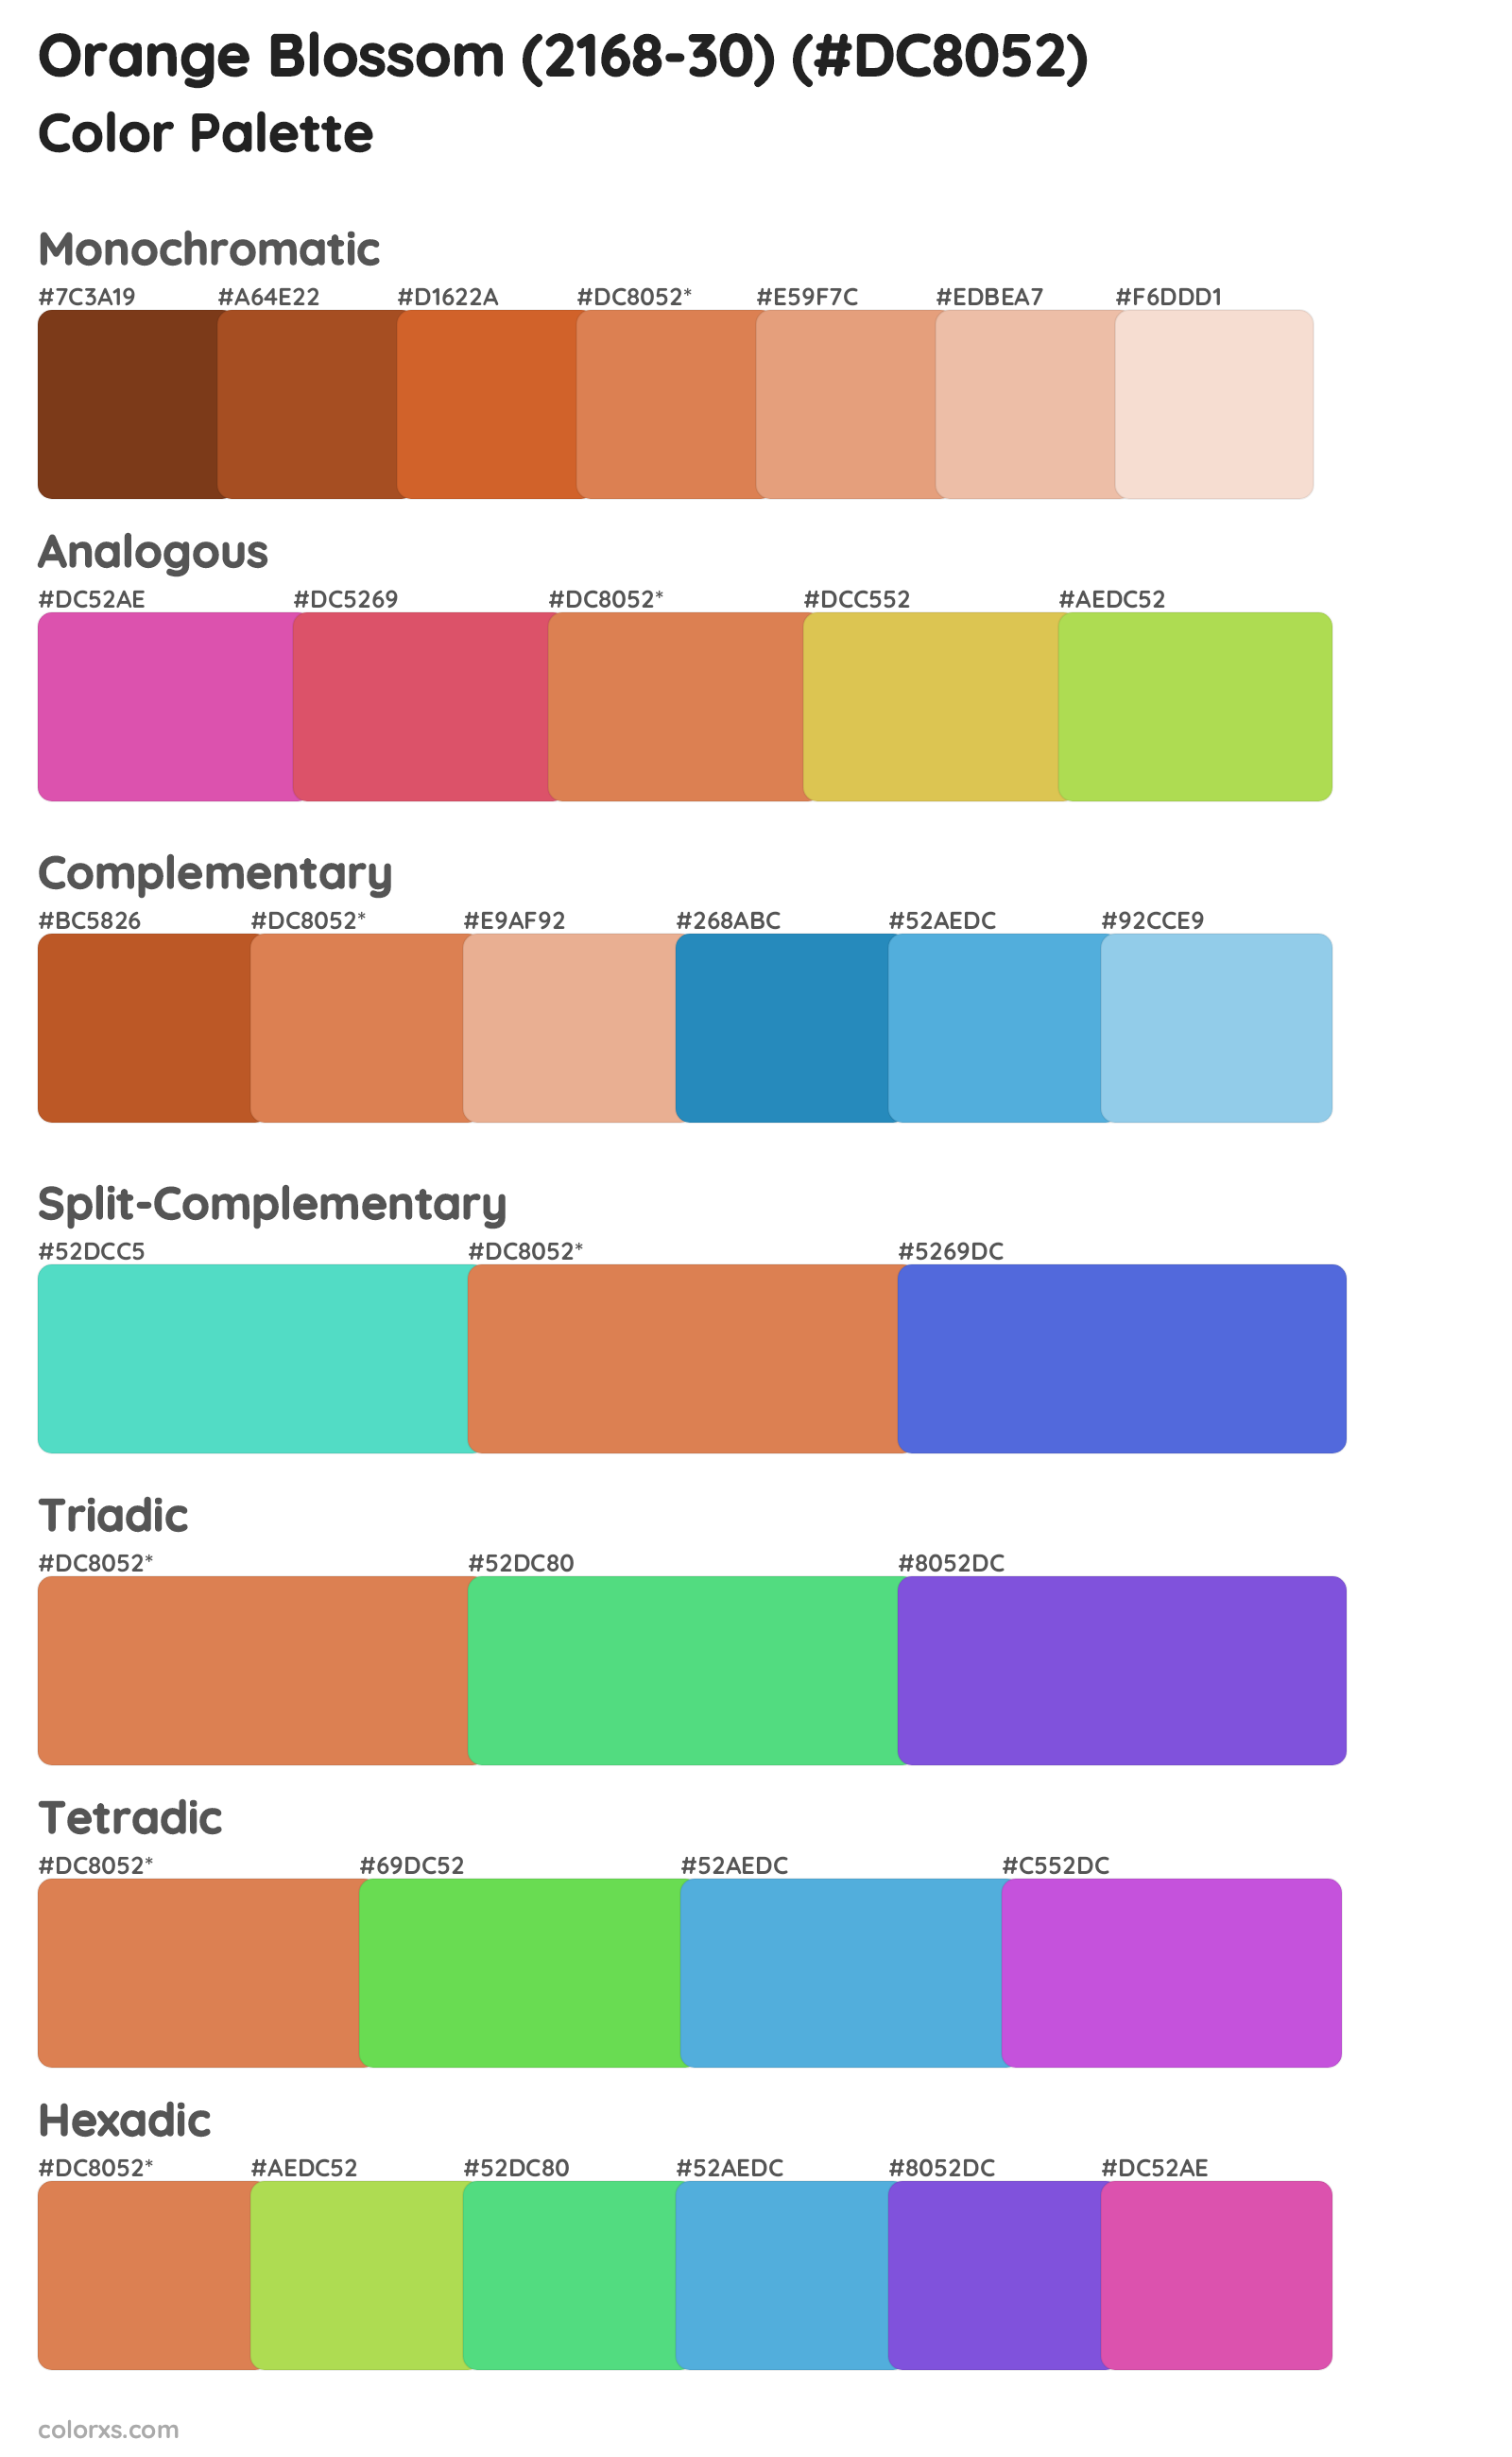 Orange Blossom (2168-30) Color Scheme Palettes